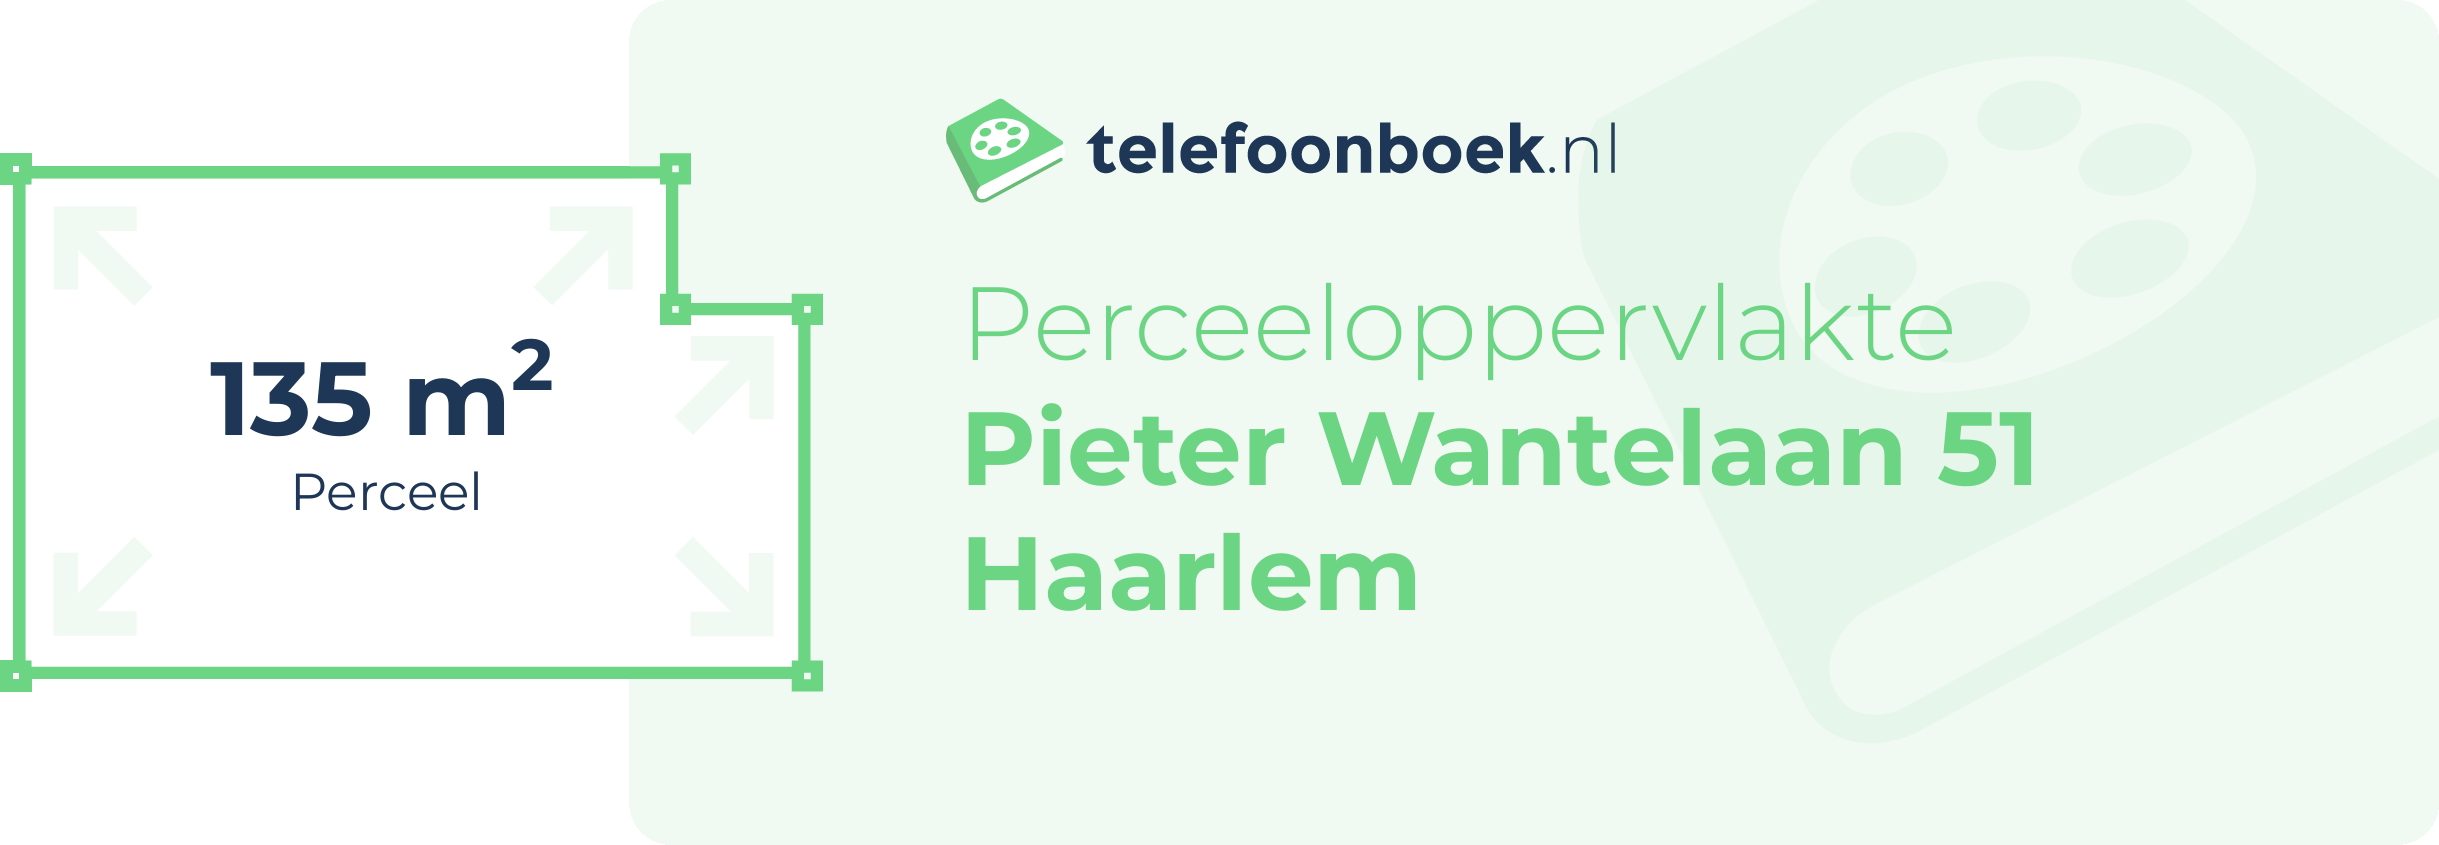 Perceeloppervlakte Pieter Wantelaan 51 Haarlem